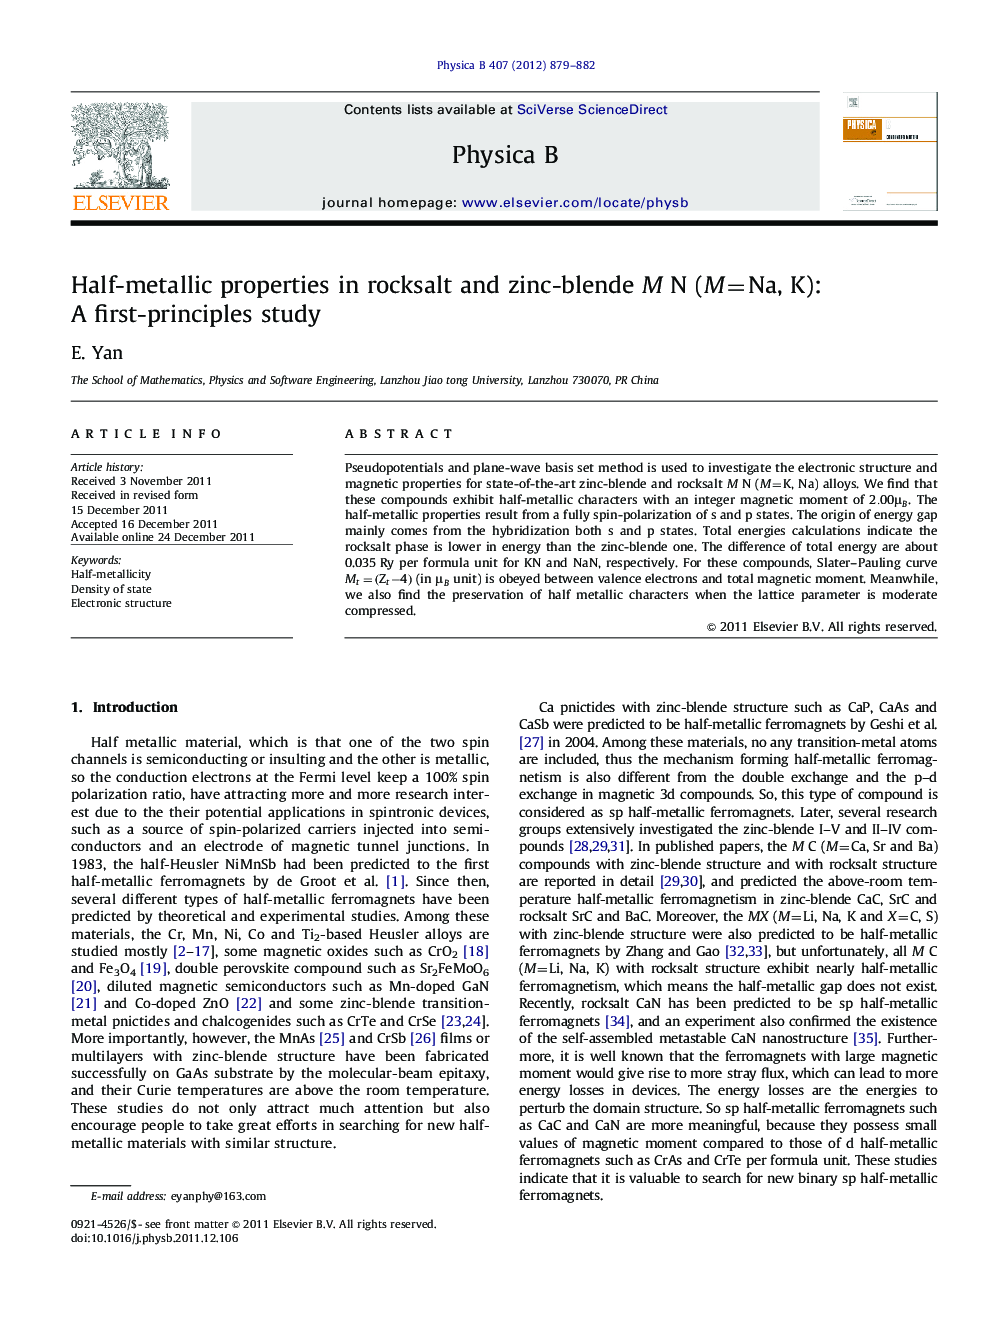 Half-metallic properties in rocksalt and zinc-blende M N (M=Na, K): A first-principles study